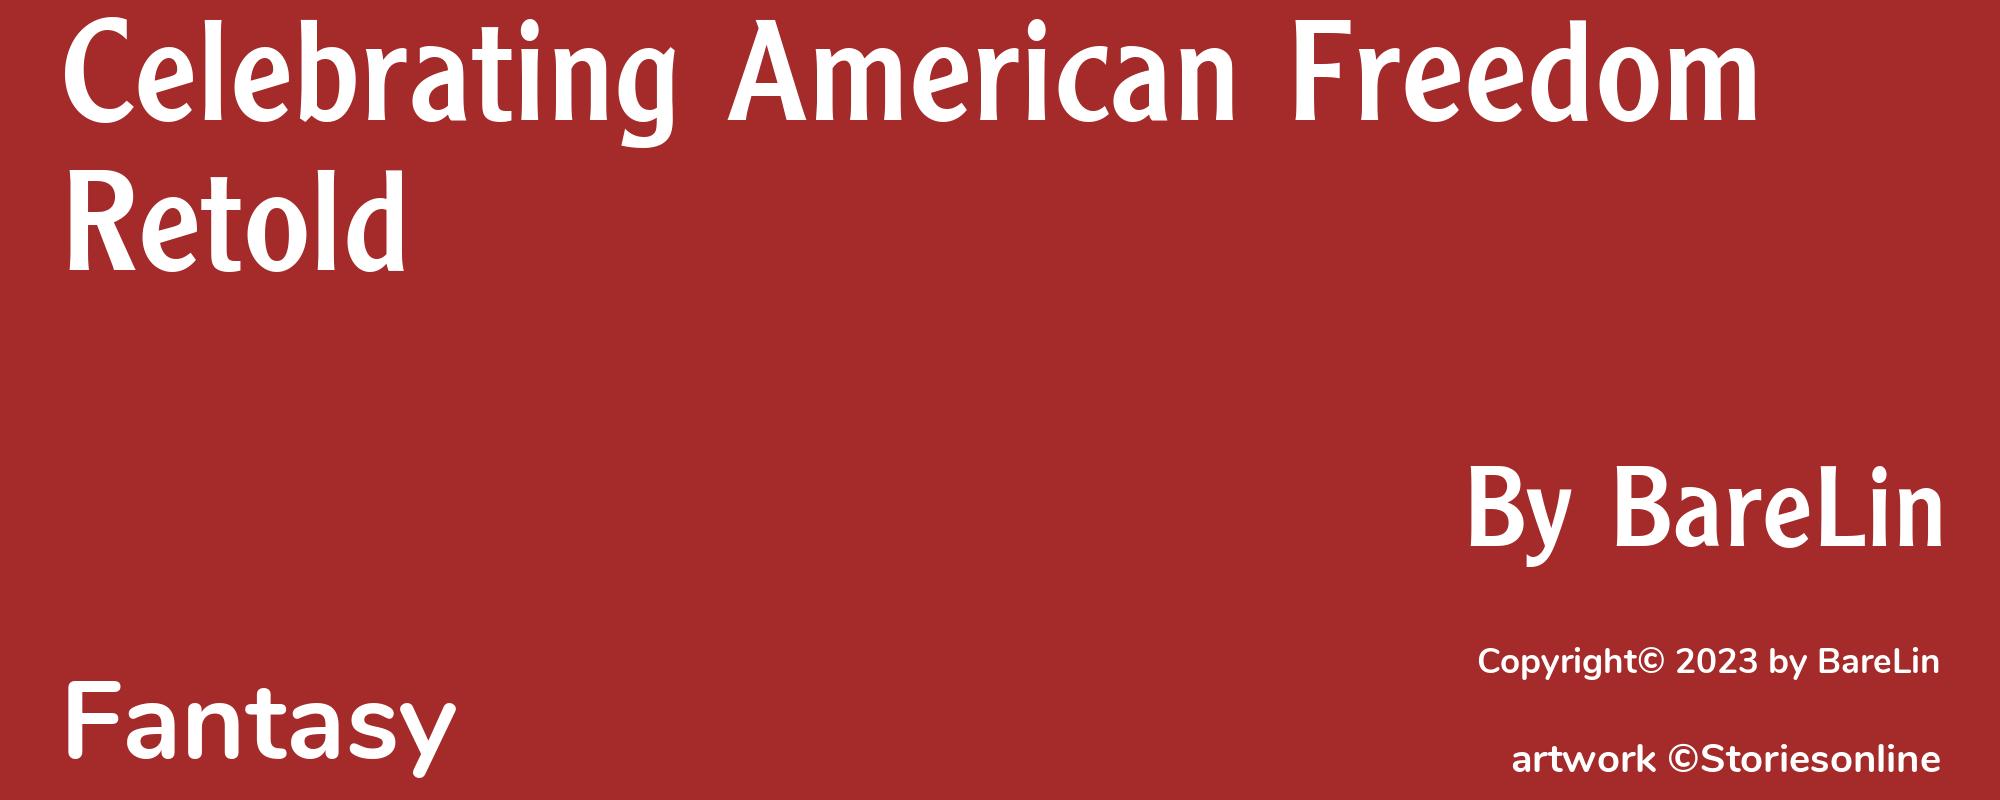 Celebrating American Freedom Retold - Cover